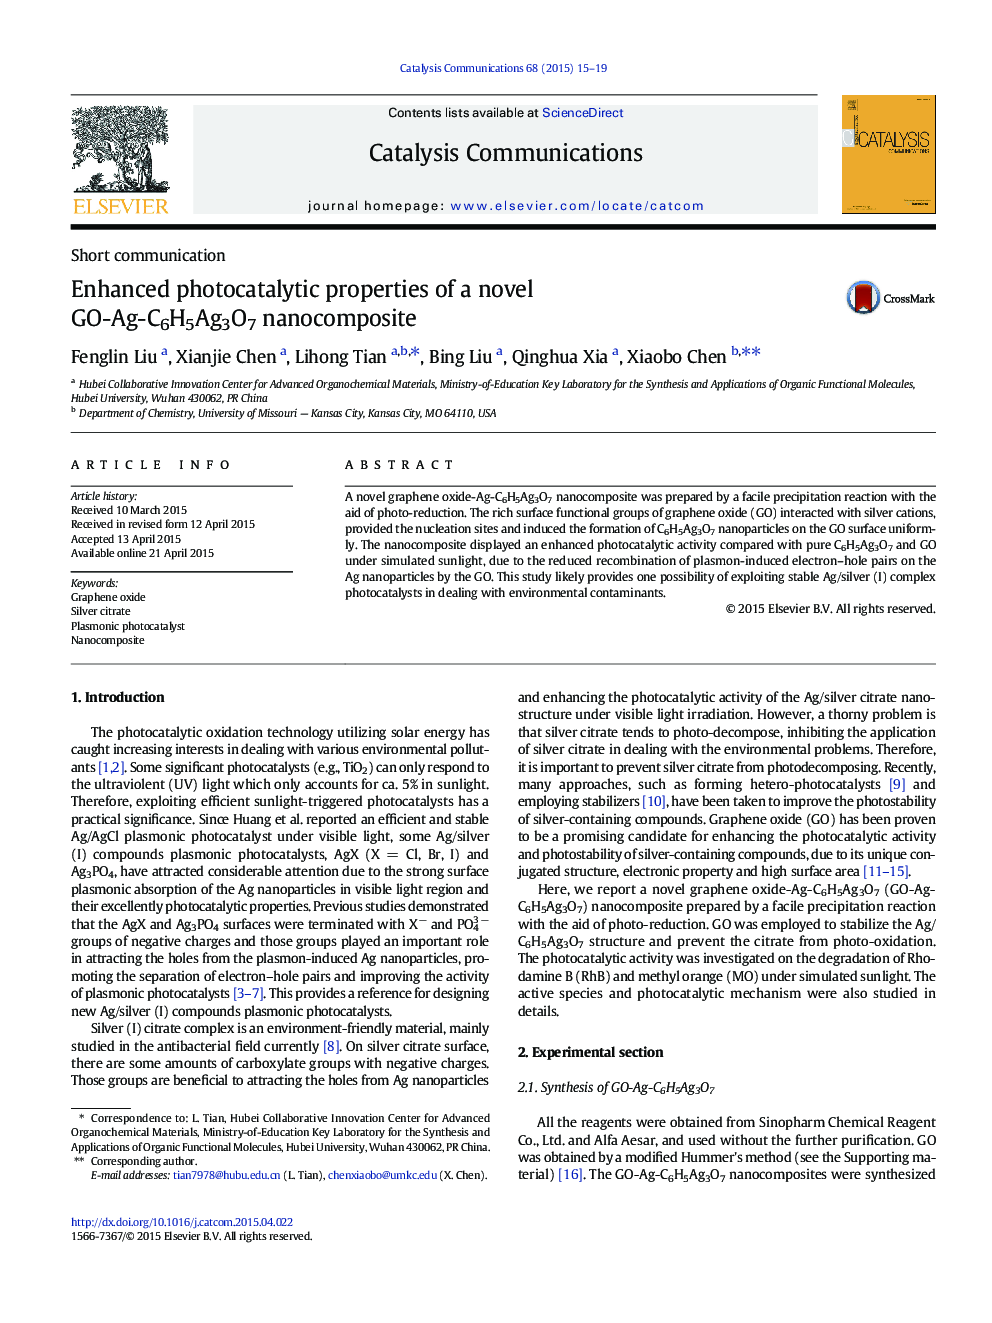 Enhanced photocatalytic properties of a novel GO-Ag-C6H5Ag3O7 nanocomposite